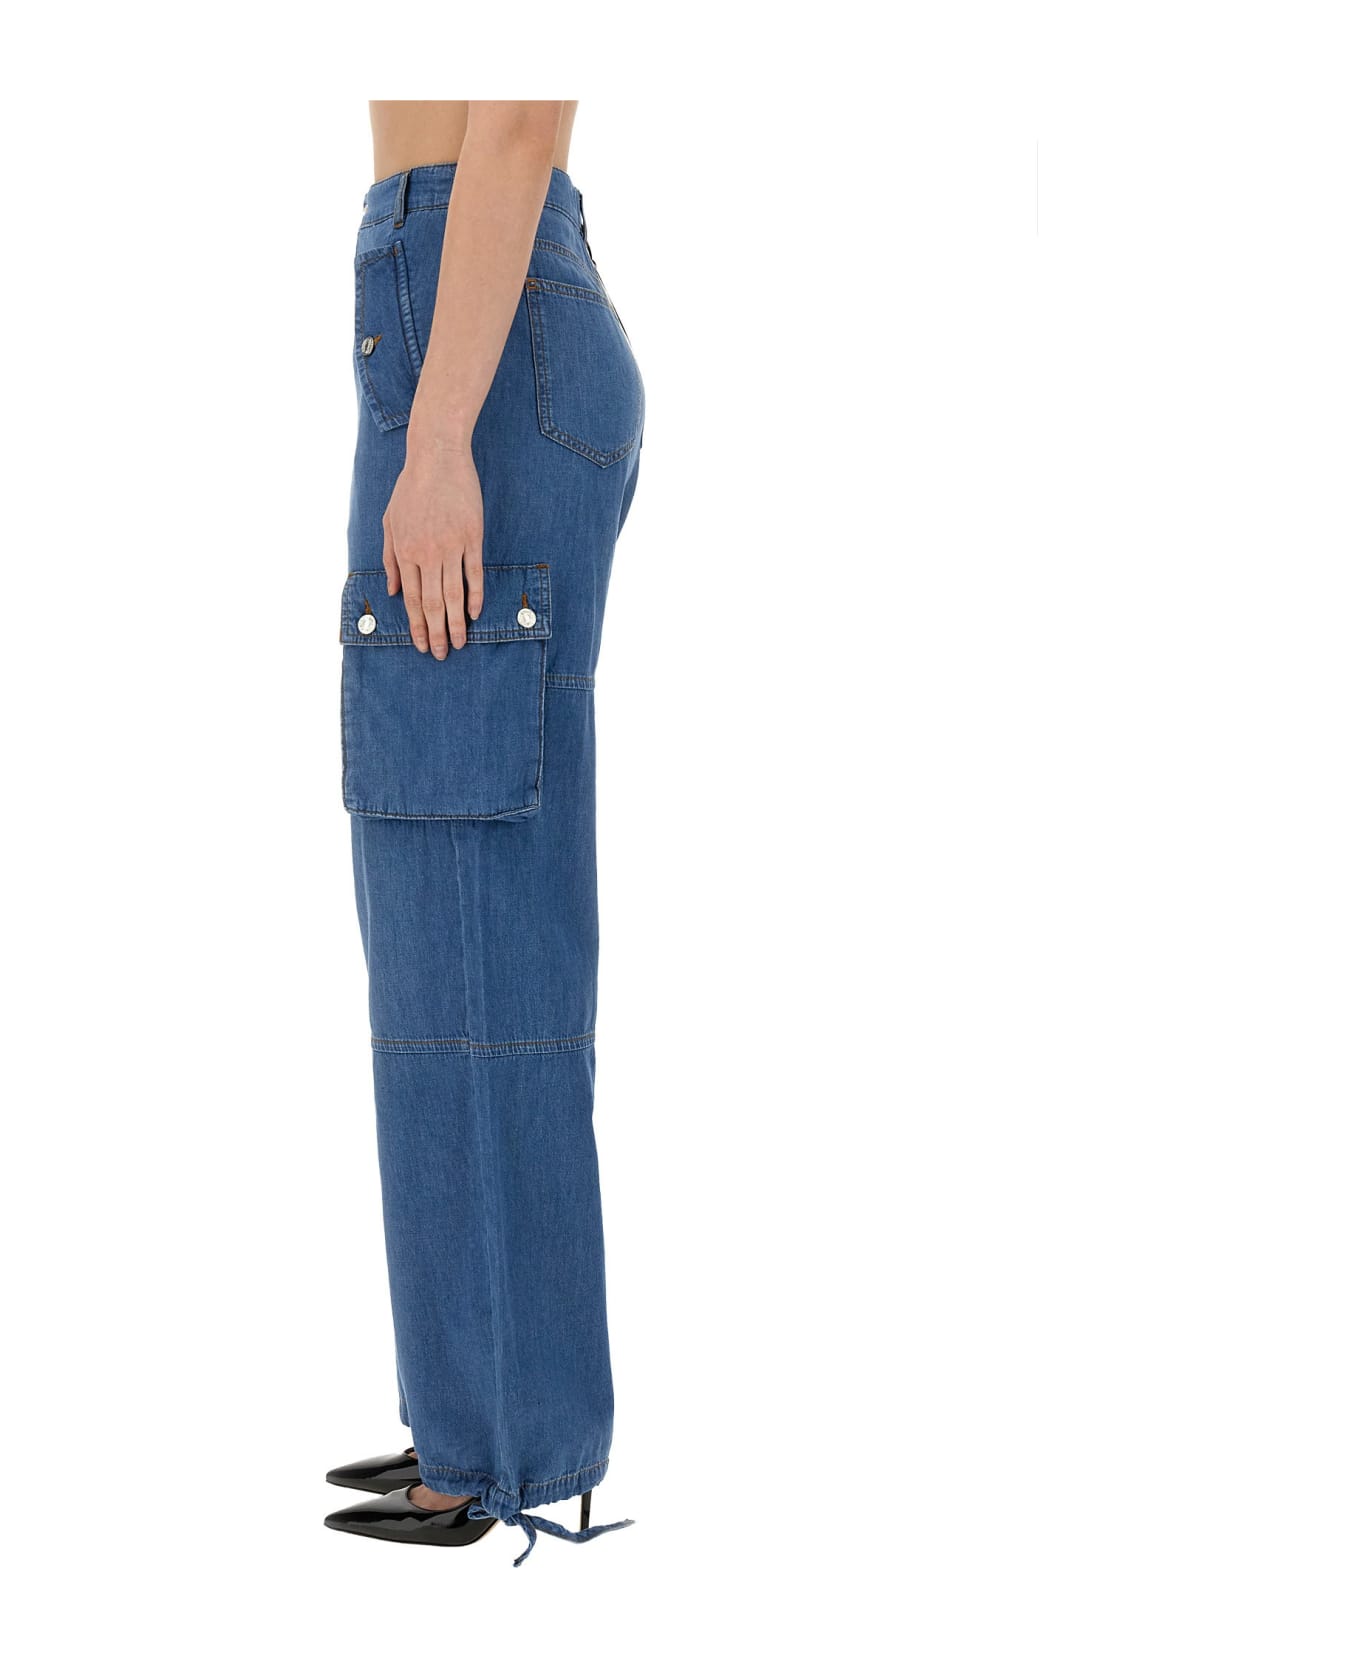 M05CH1N0 Jeans Cargo Pants - Denim